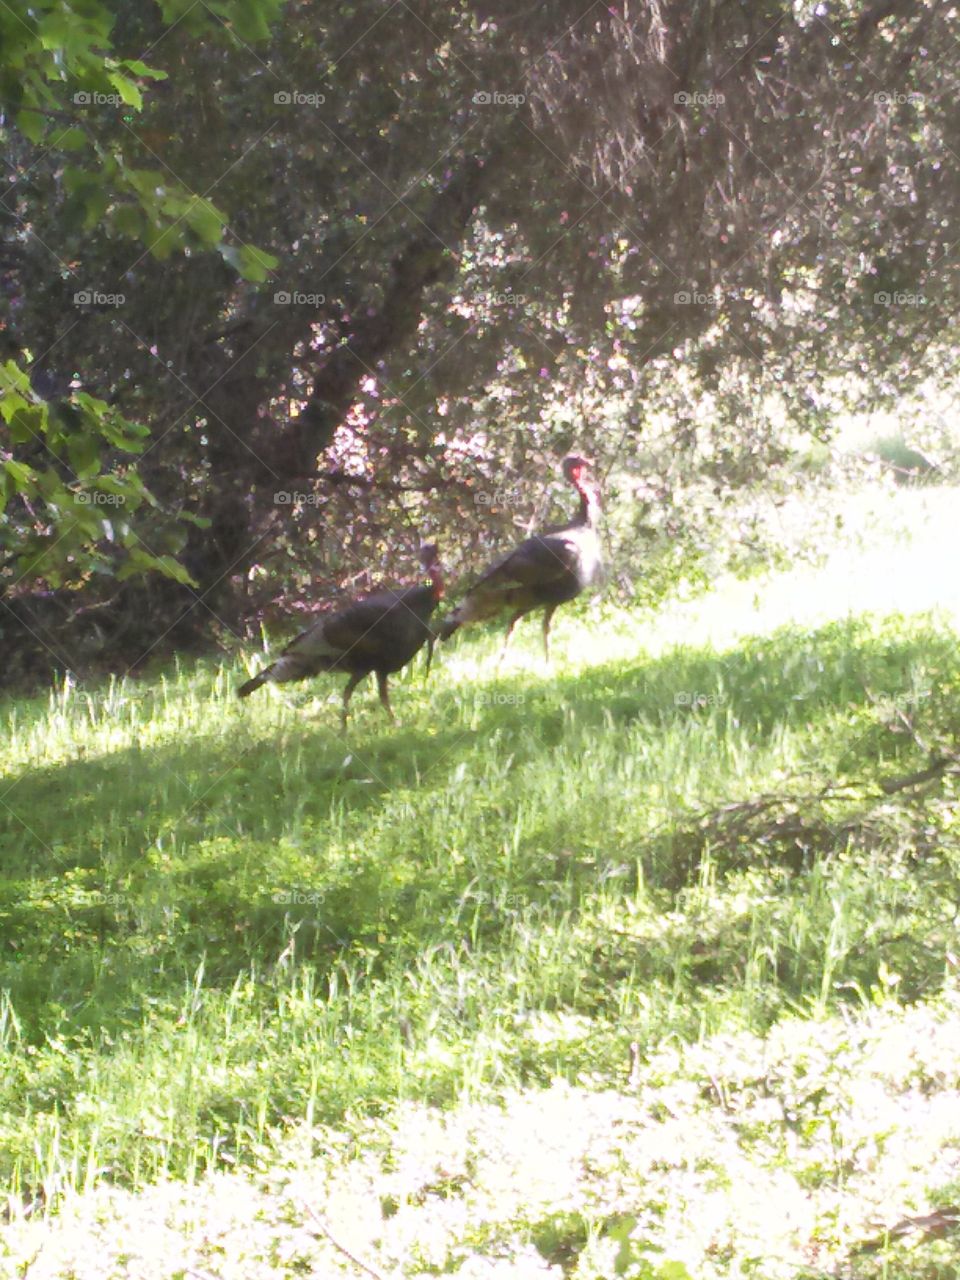 wild Turkey. I was hiking on a saturday. I notice these turkeys such a P